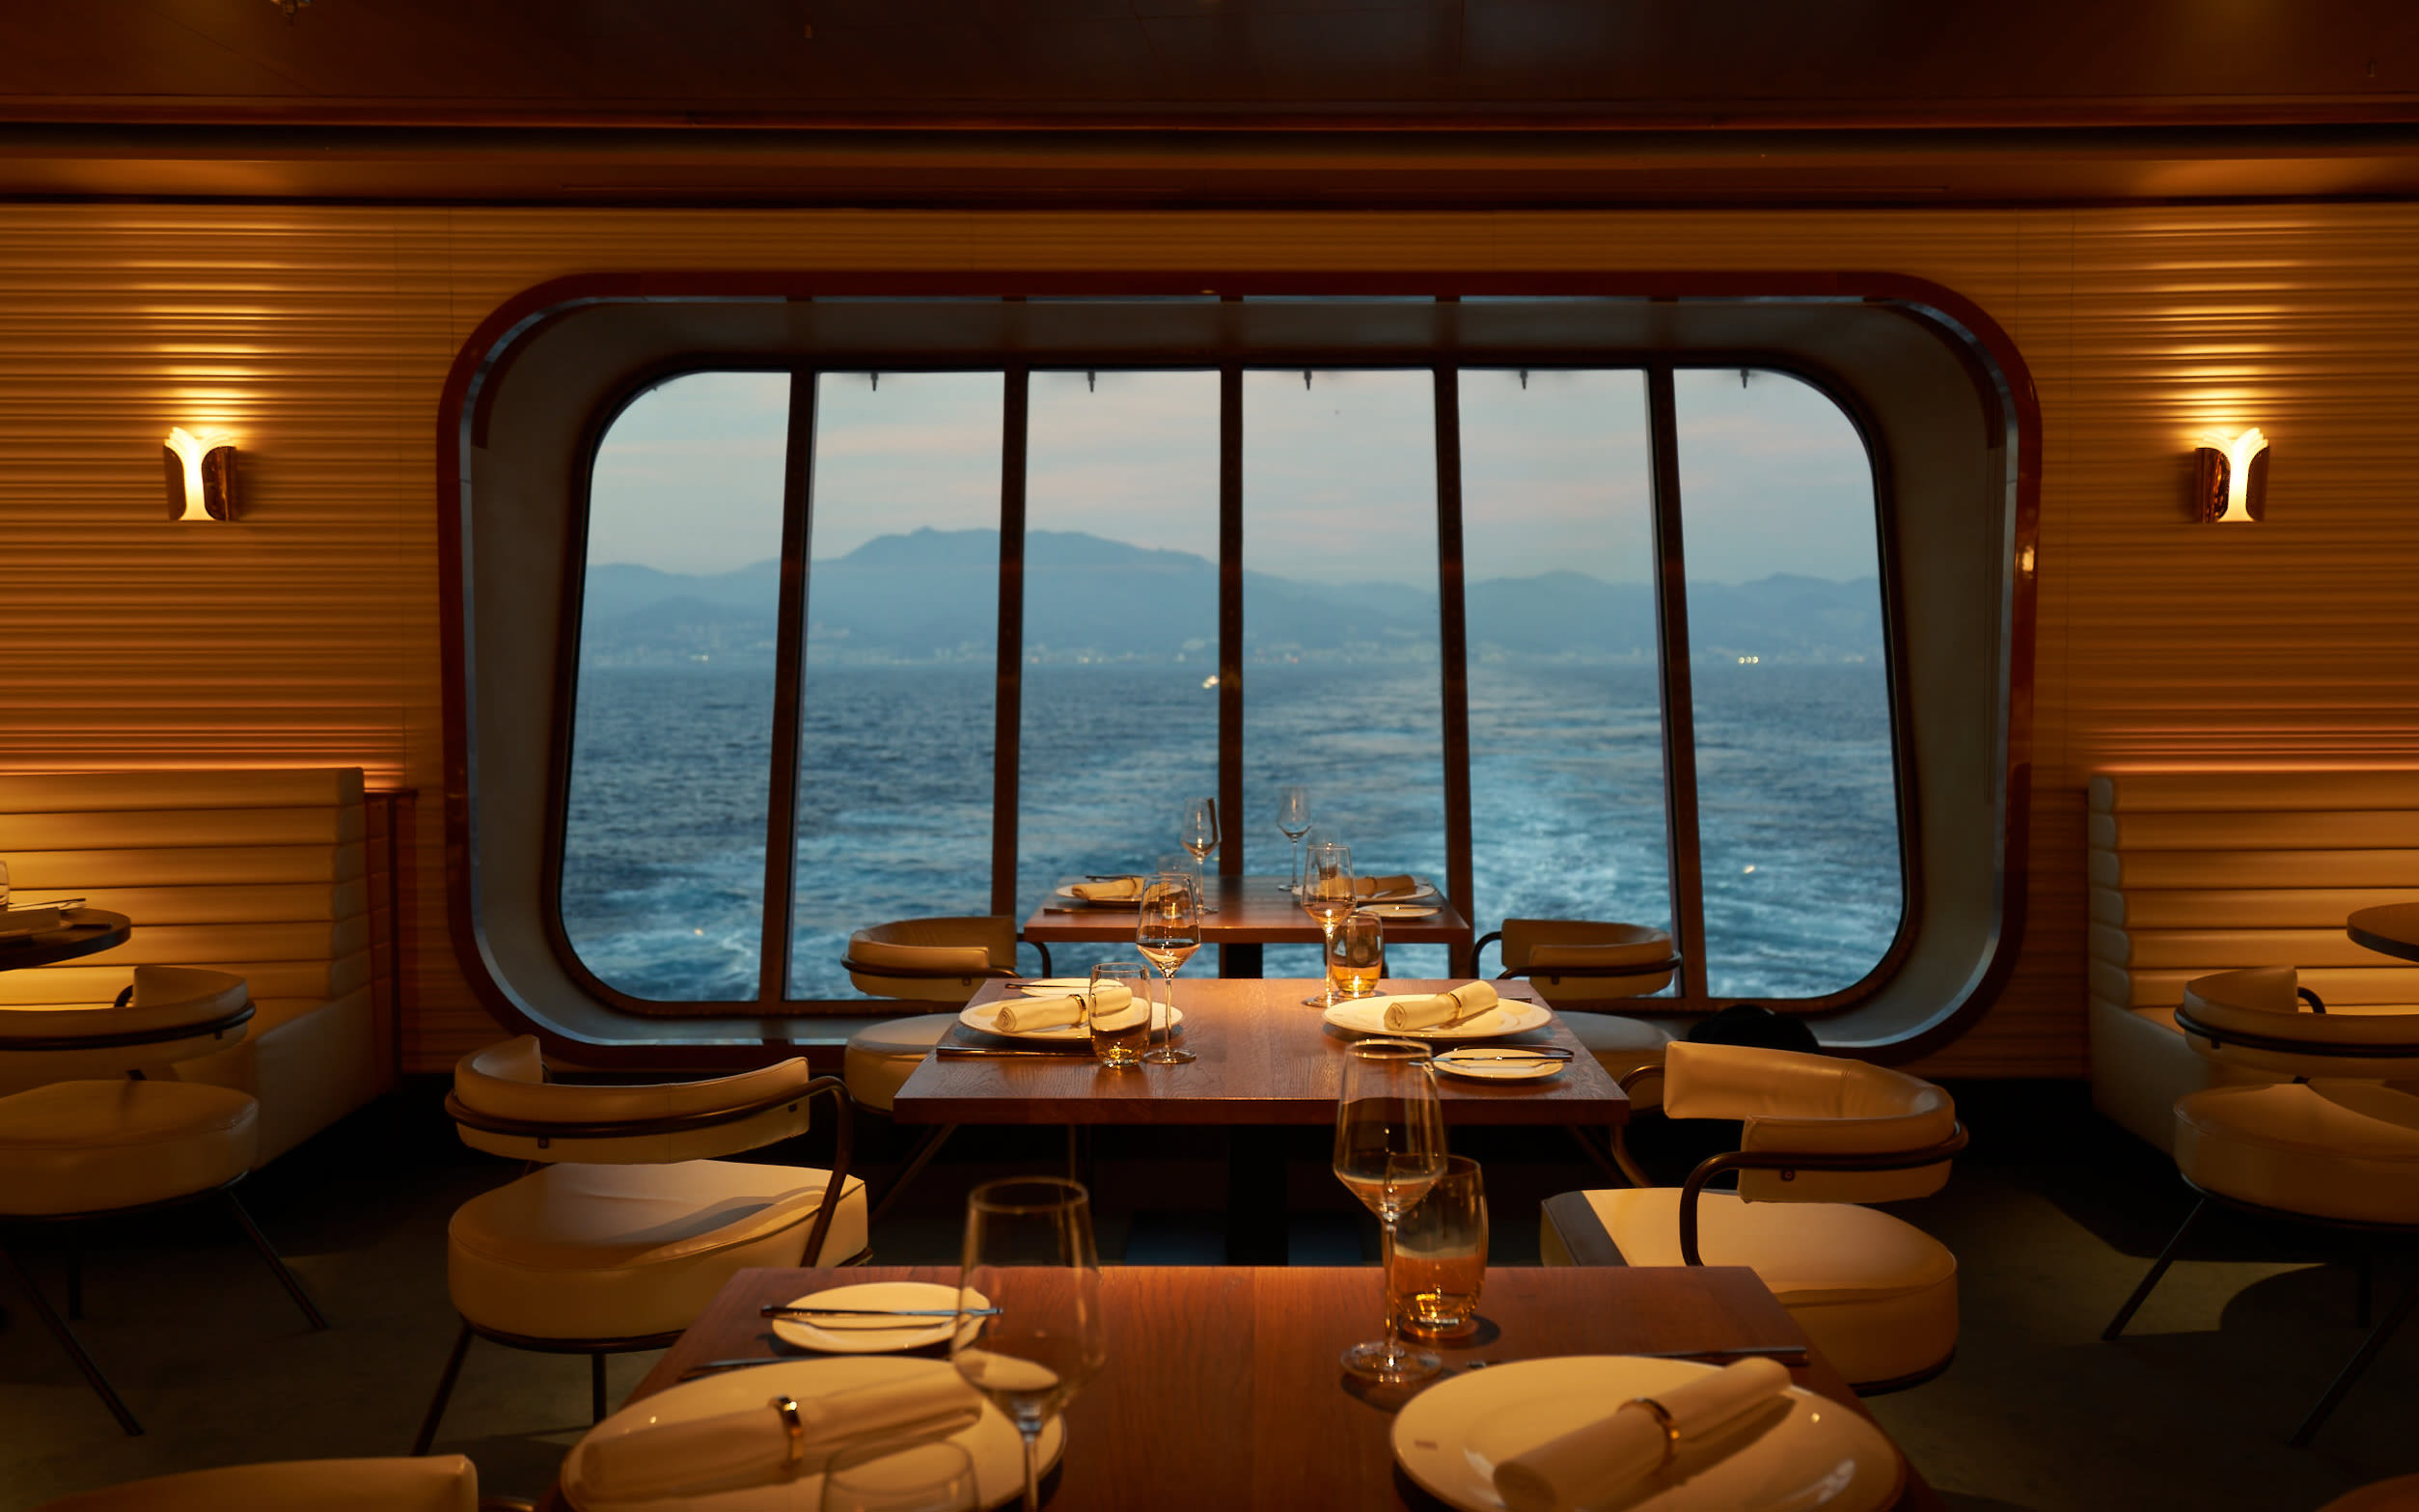 A restaurant on board Virgin Voyages' ship Scarlet Lady